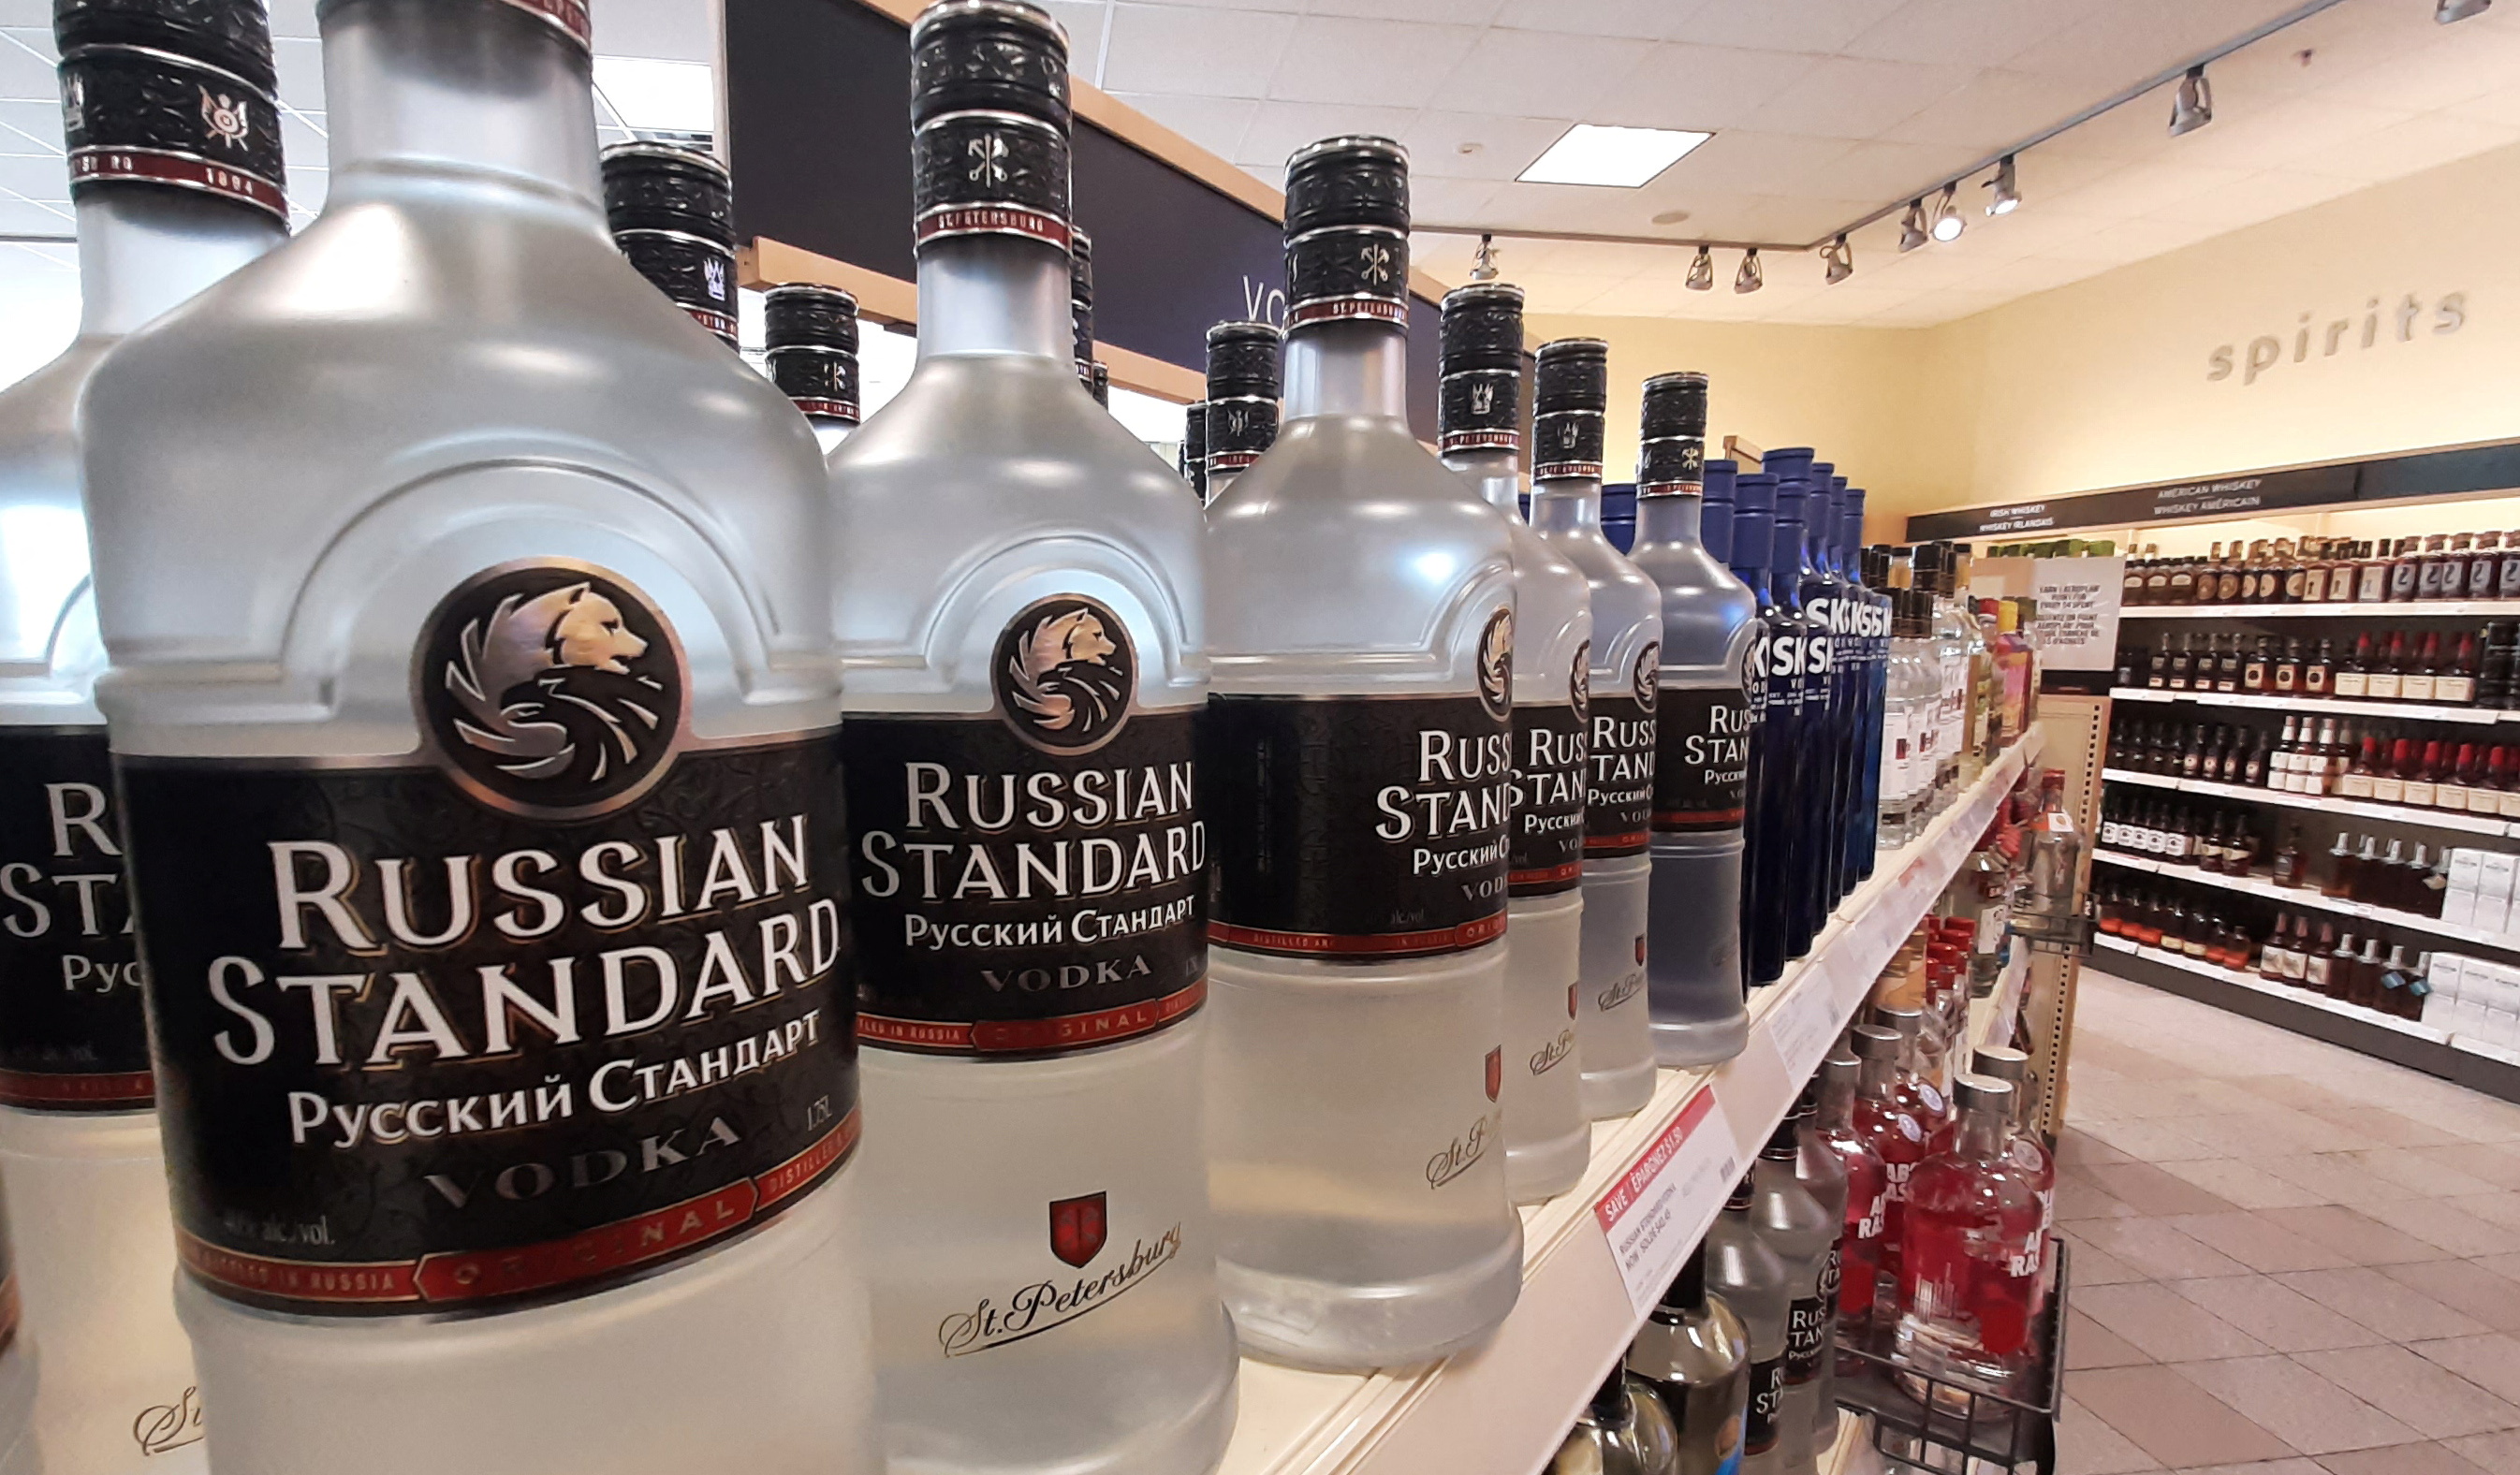 Bottles of Russian Standard Vodka are seen in a LCBO store in Ottawa